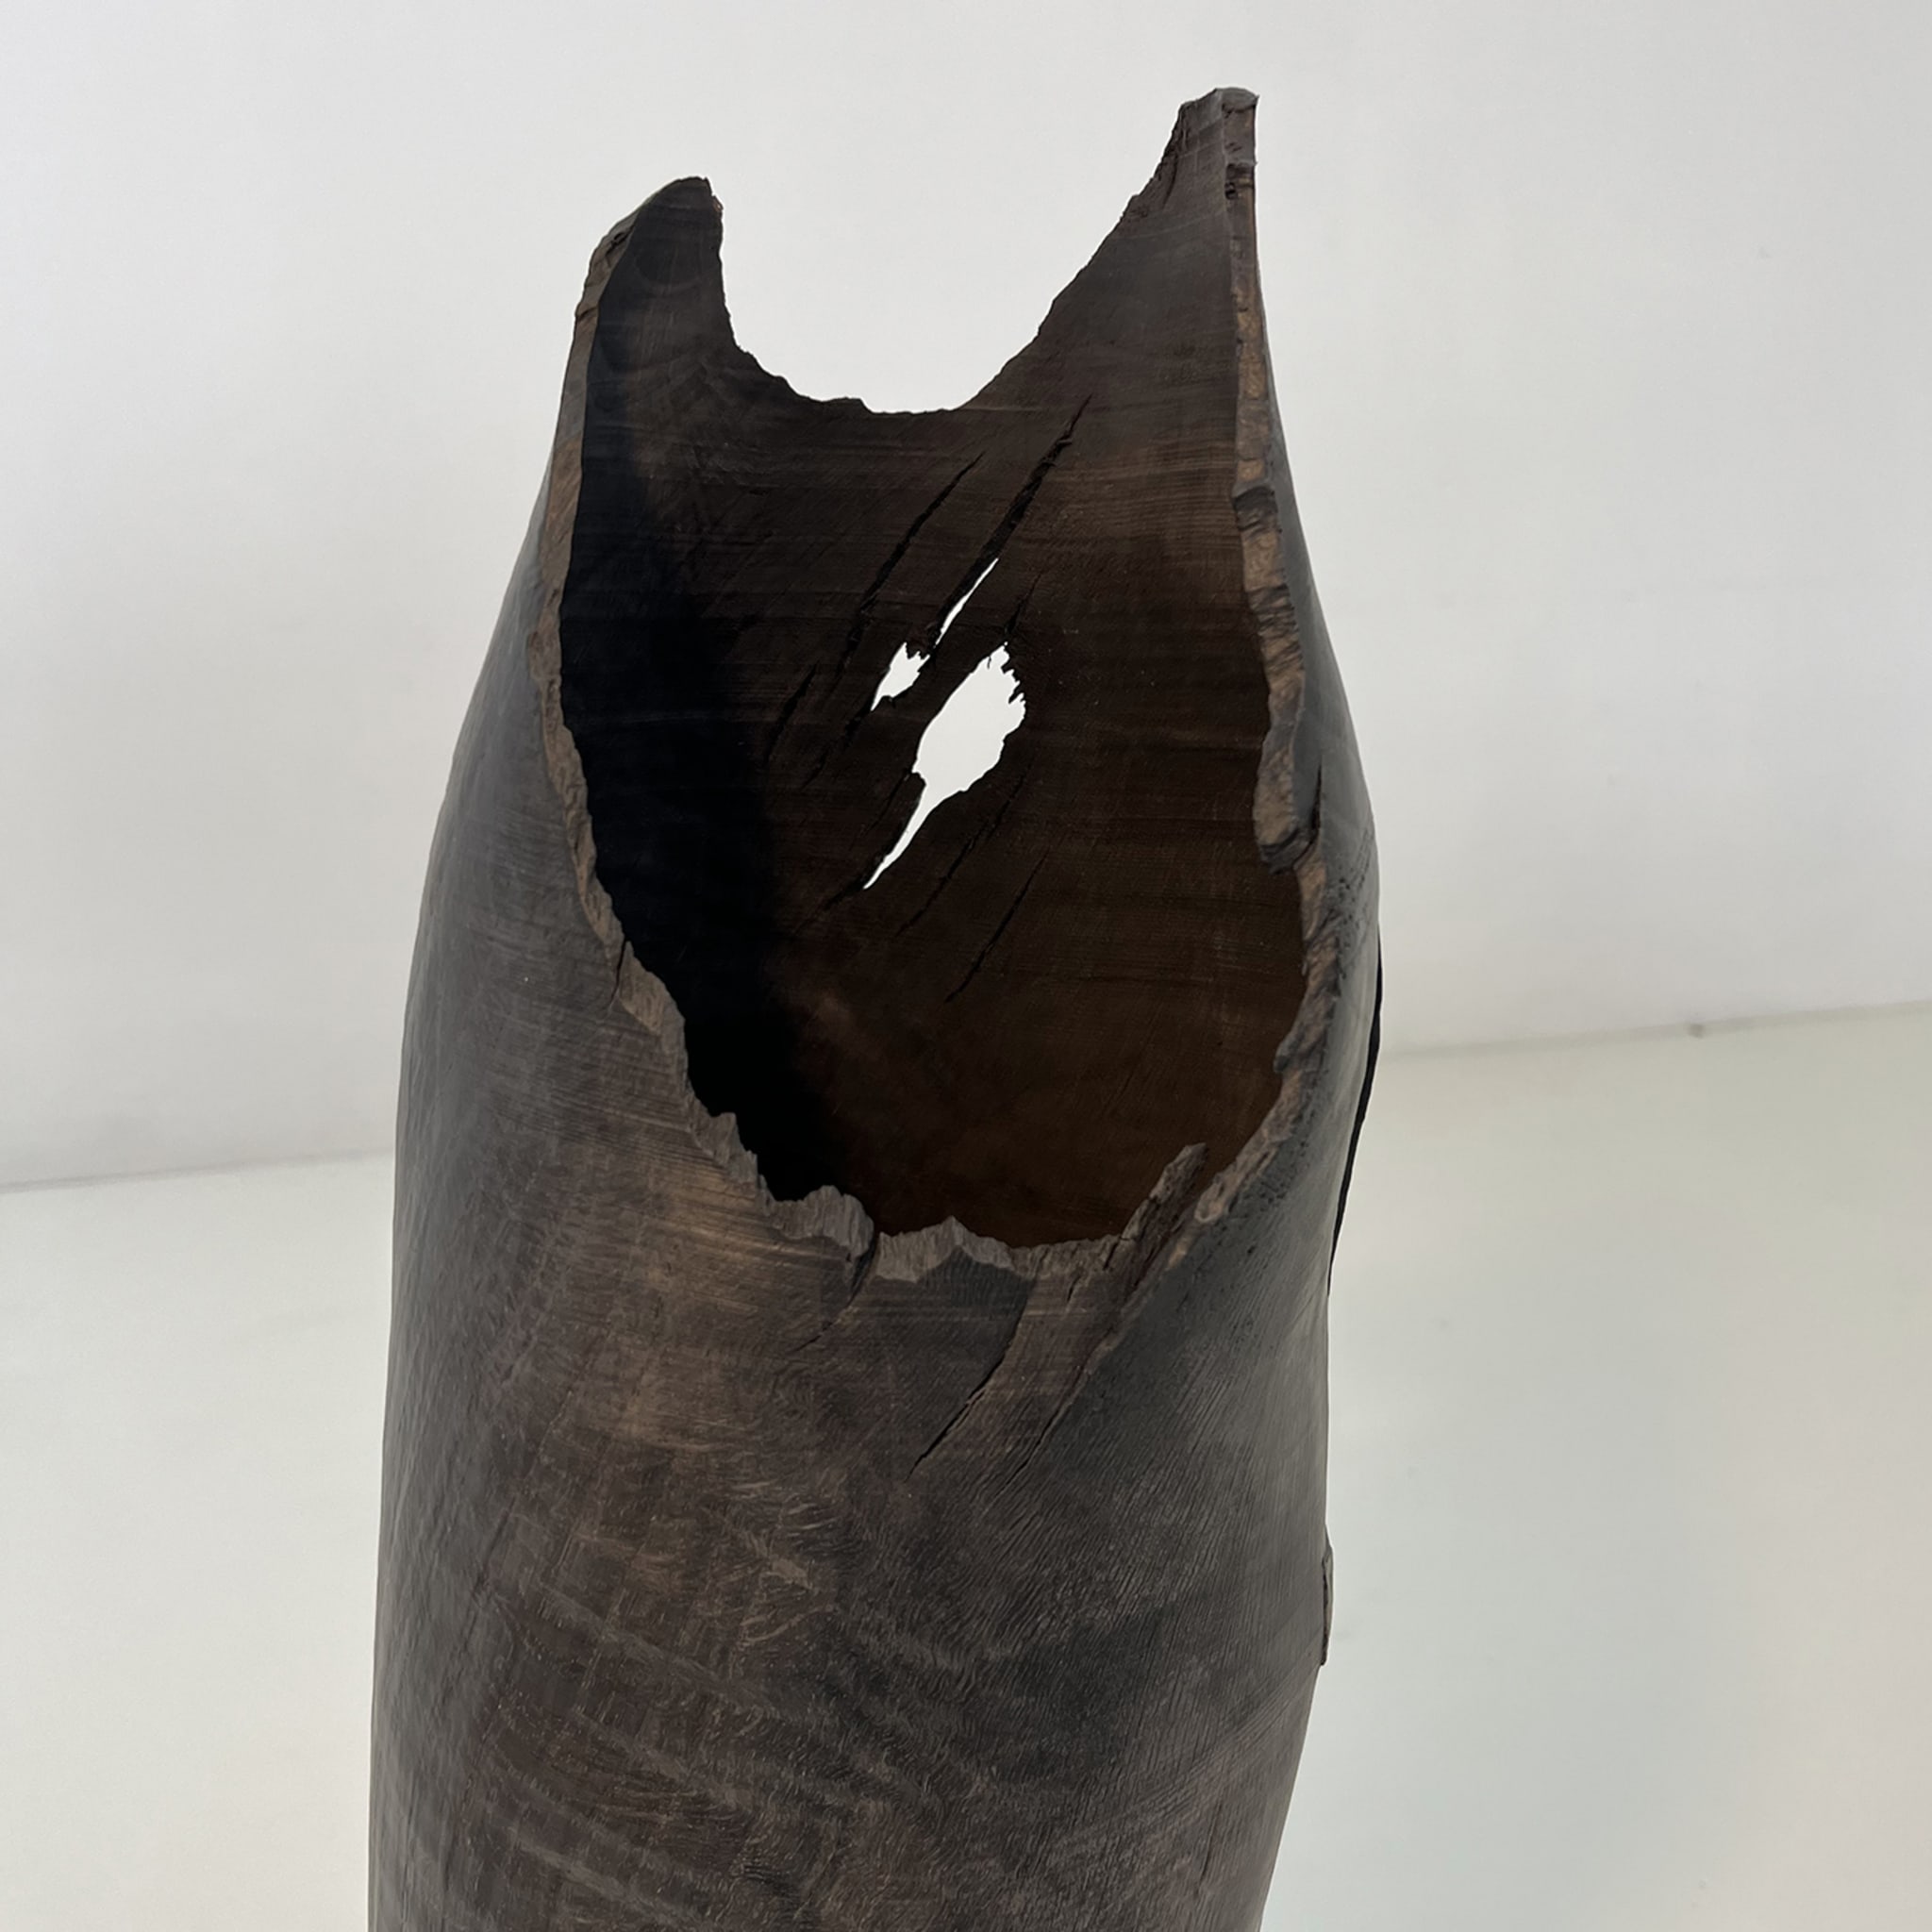 Fossil Oak Hollow Vase #1 - Alternative view 2